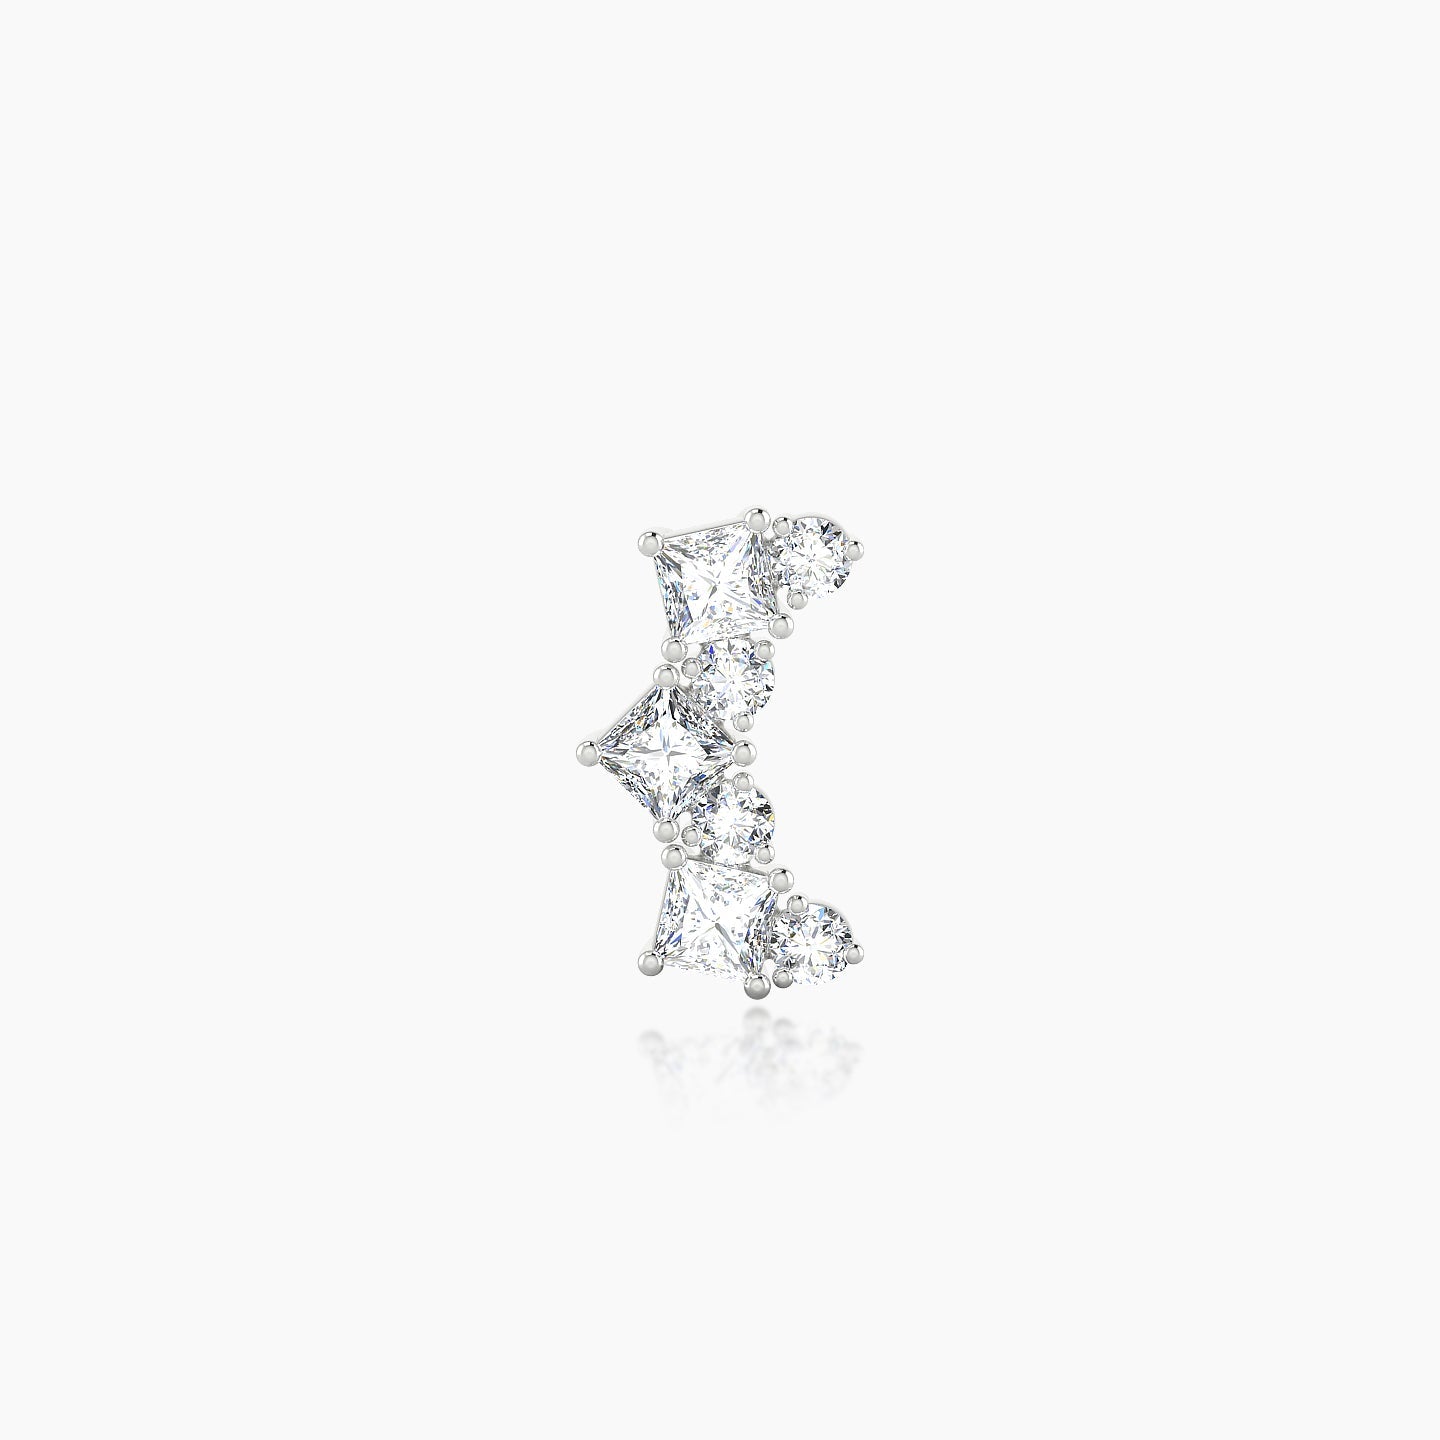 Ariana M | 18k White Gold 9.5 mm Diamond Piercing